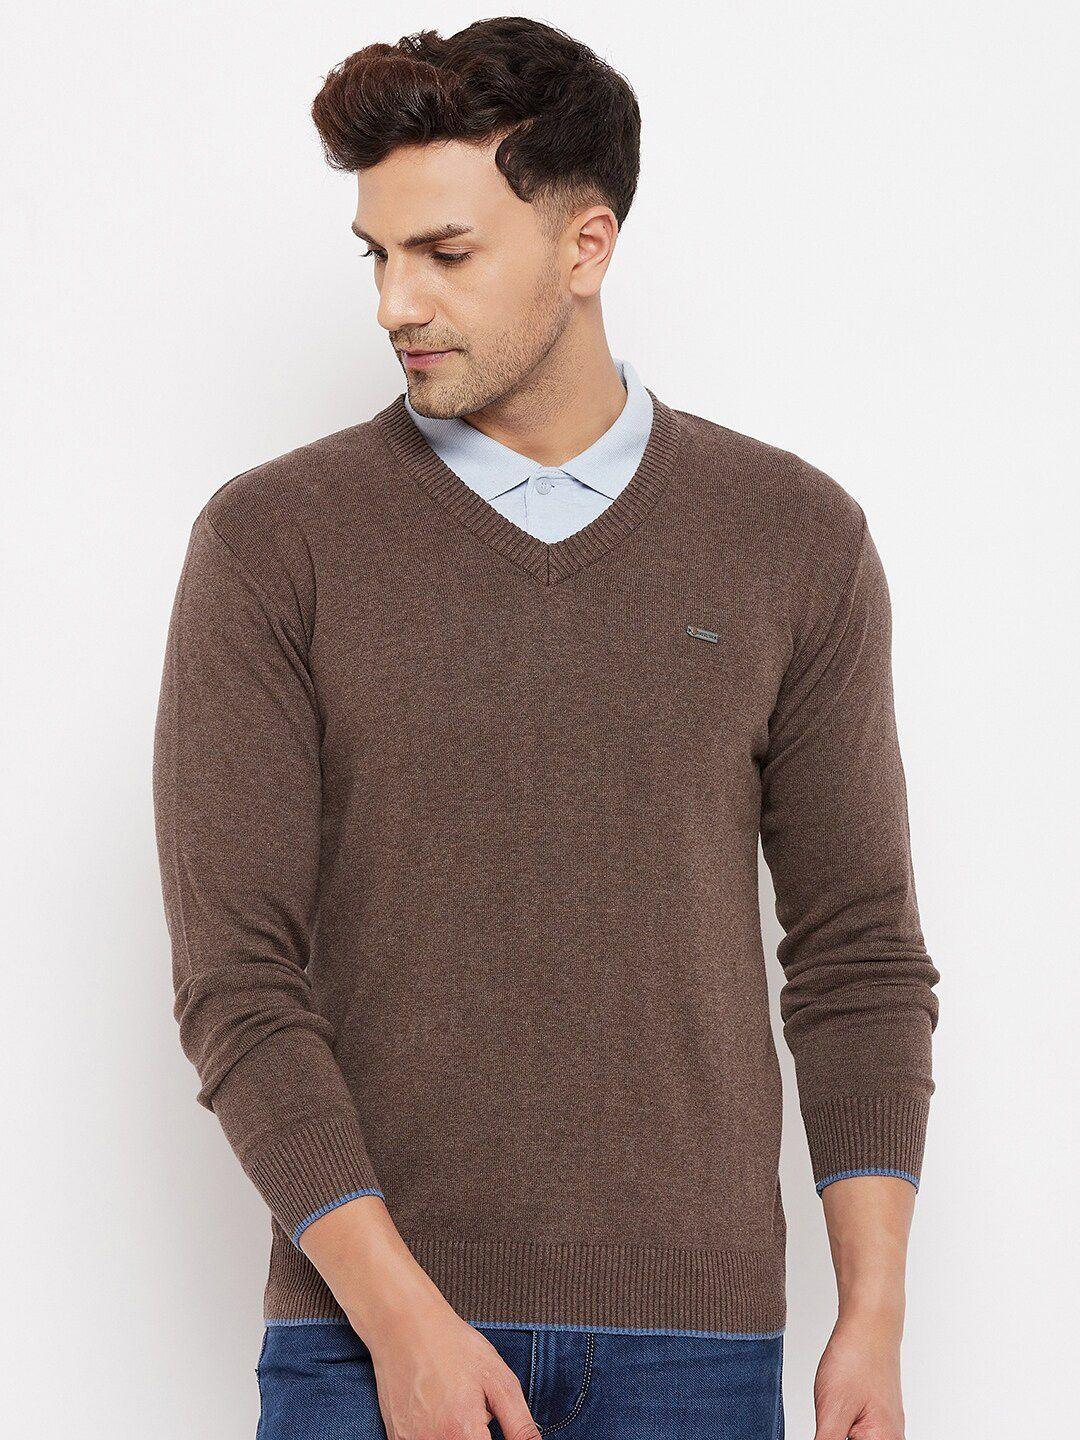 duke-men-brown-solid-long-sleeves-pullover